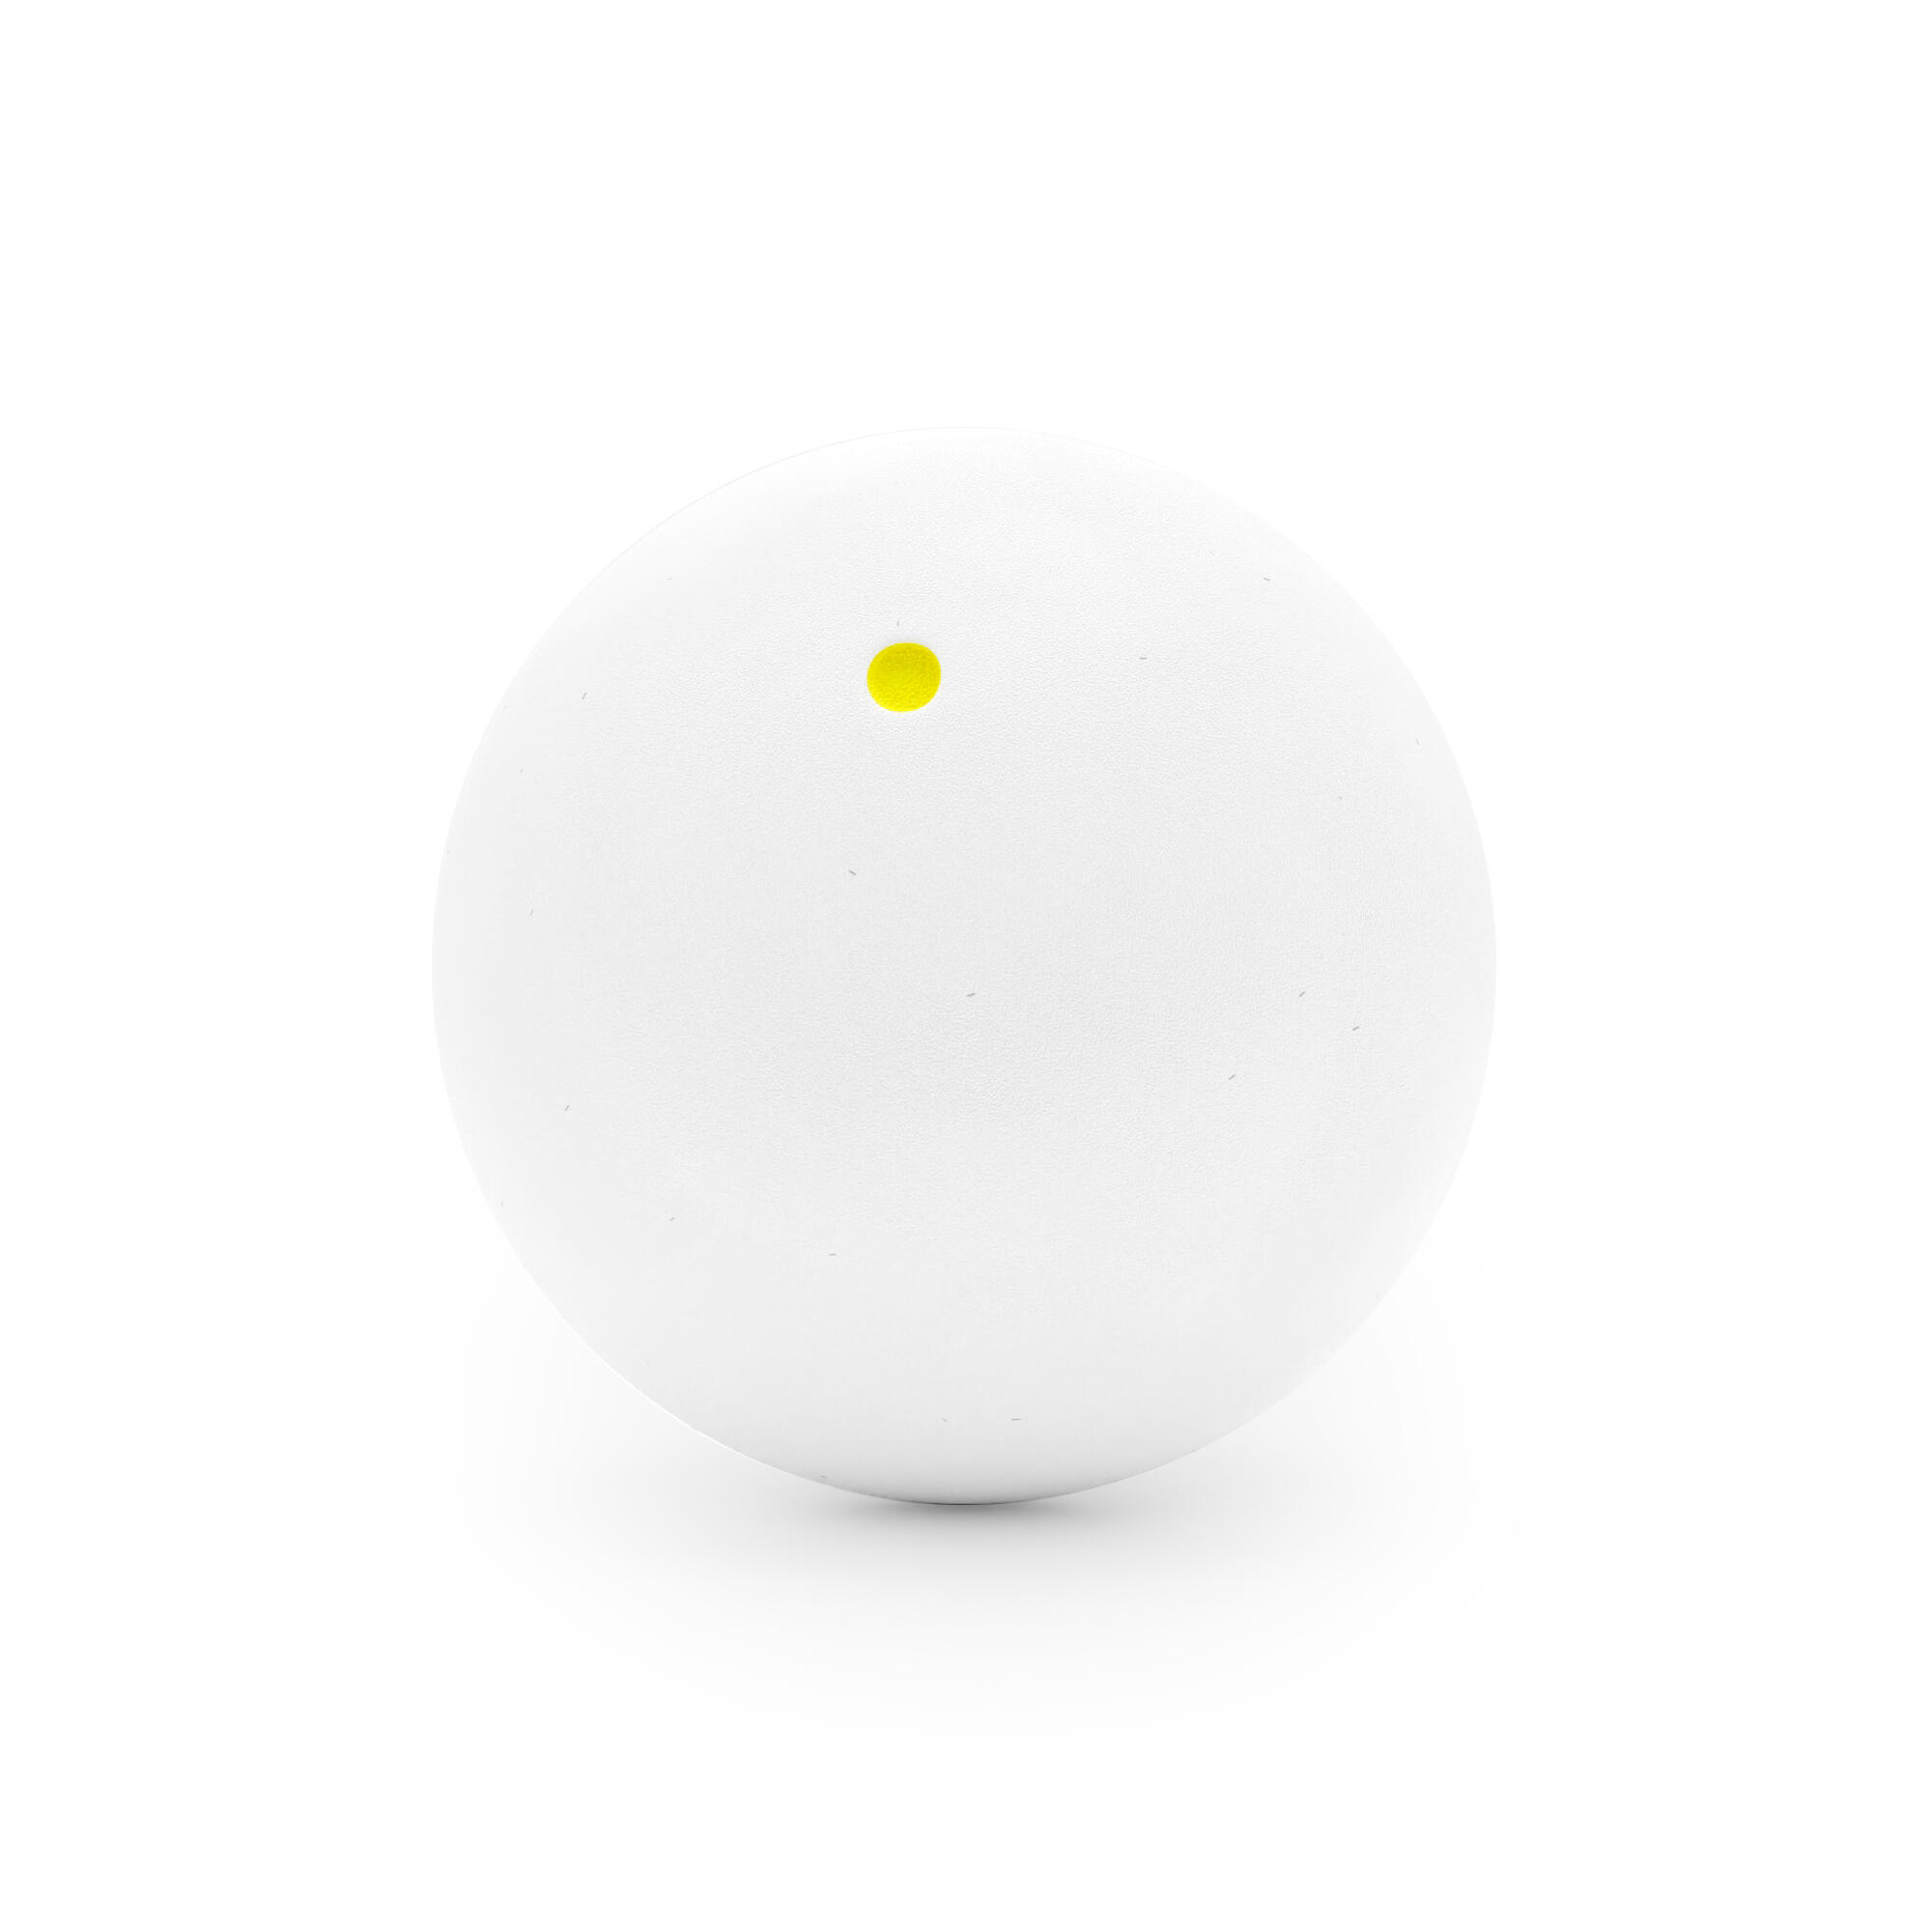 PERFLY Squash Ball SB 960 Yellow Dot - White